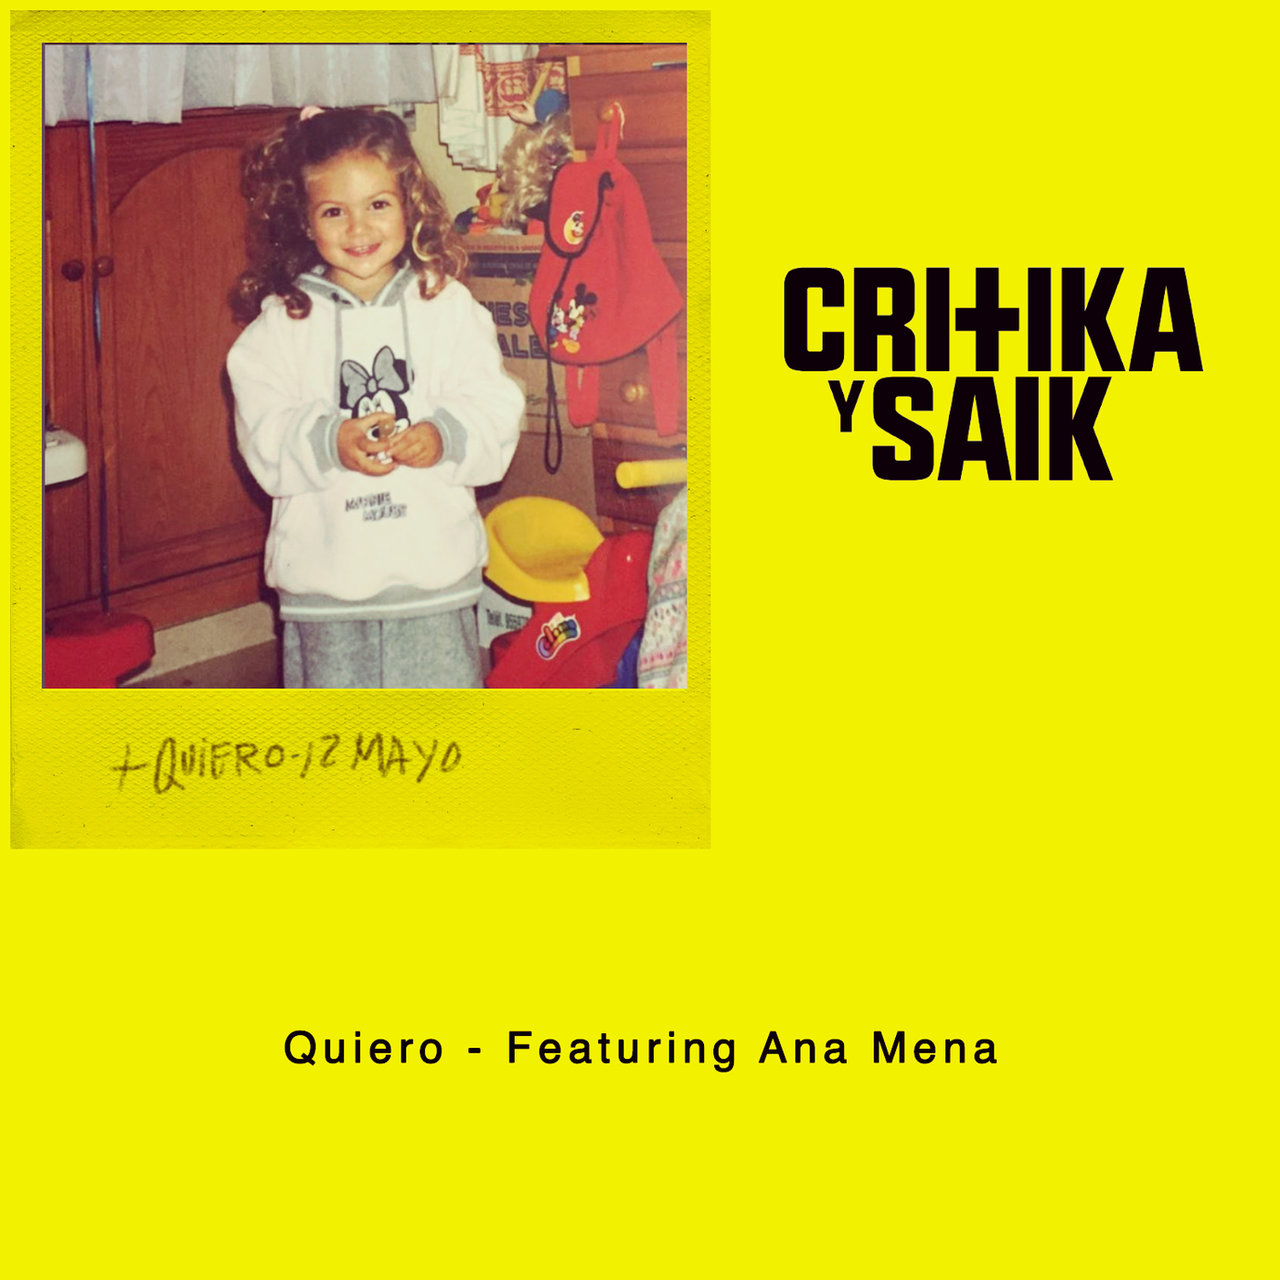 Critika y Saik featuring Ana Mena — Quiero cover artwork